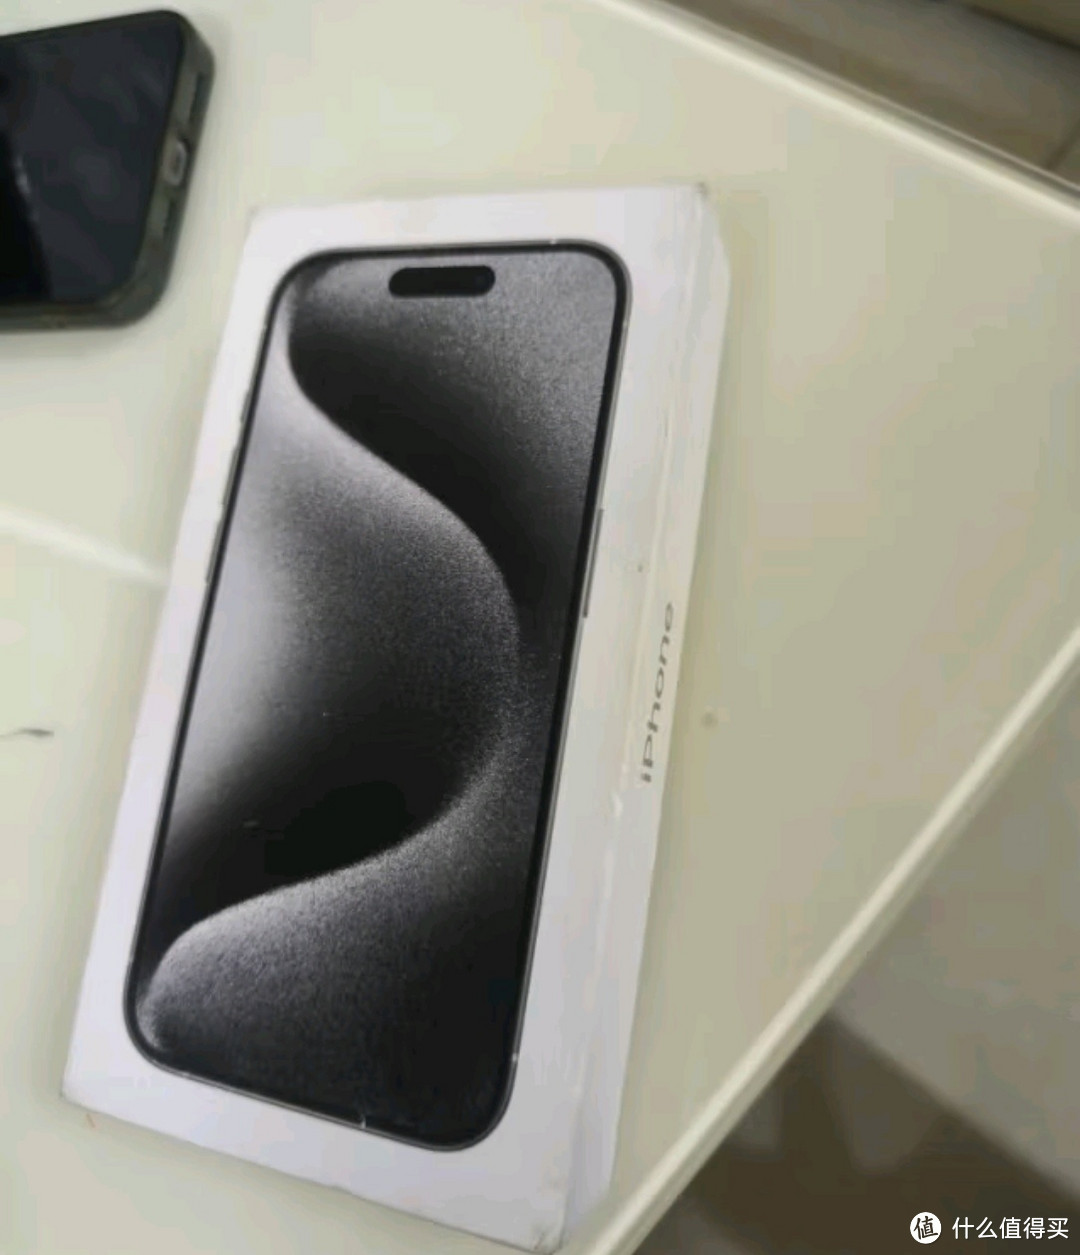 iphone 15 pro (a3104) 256gb 白色钛金属:未来已来,5g双卡双待新篇章